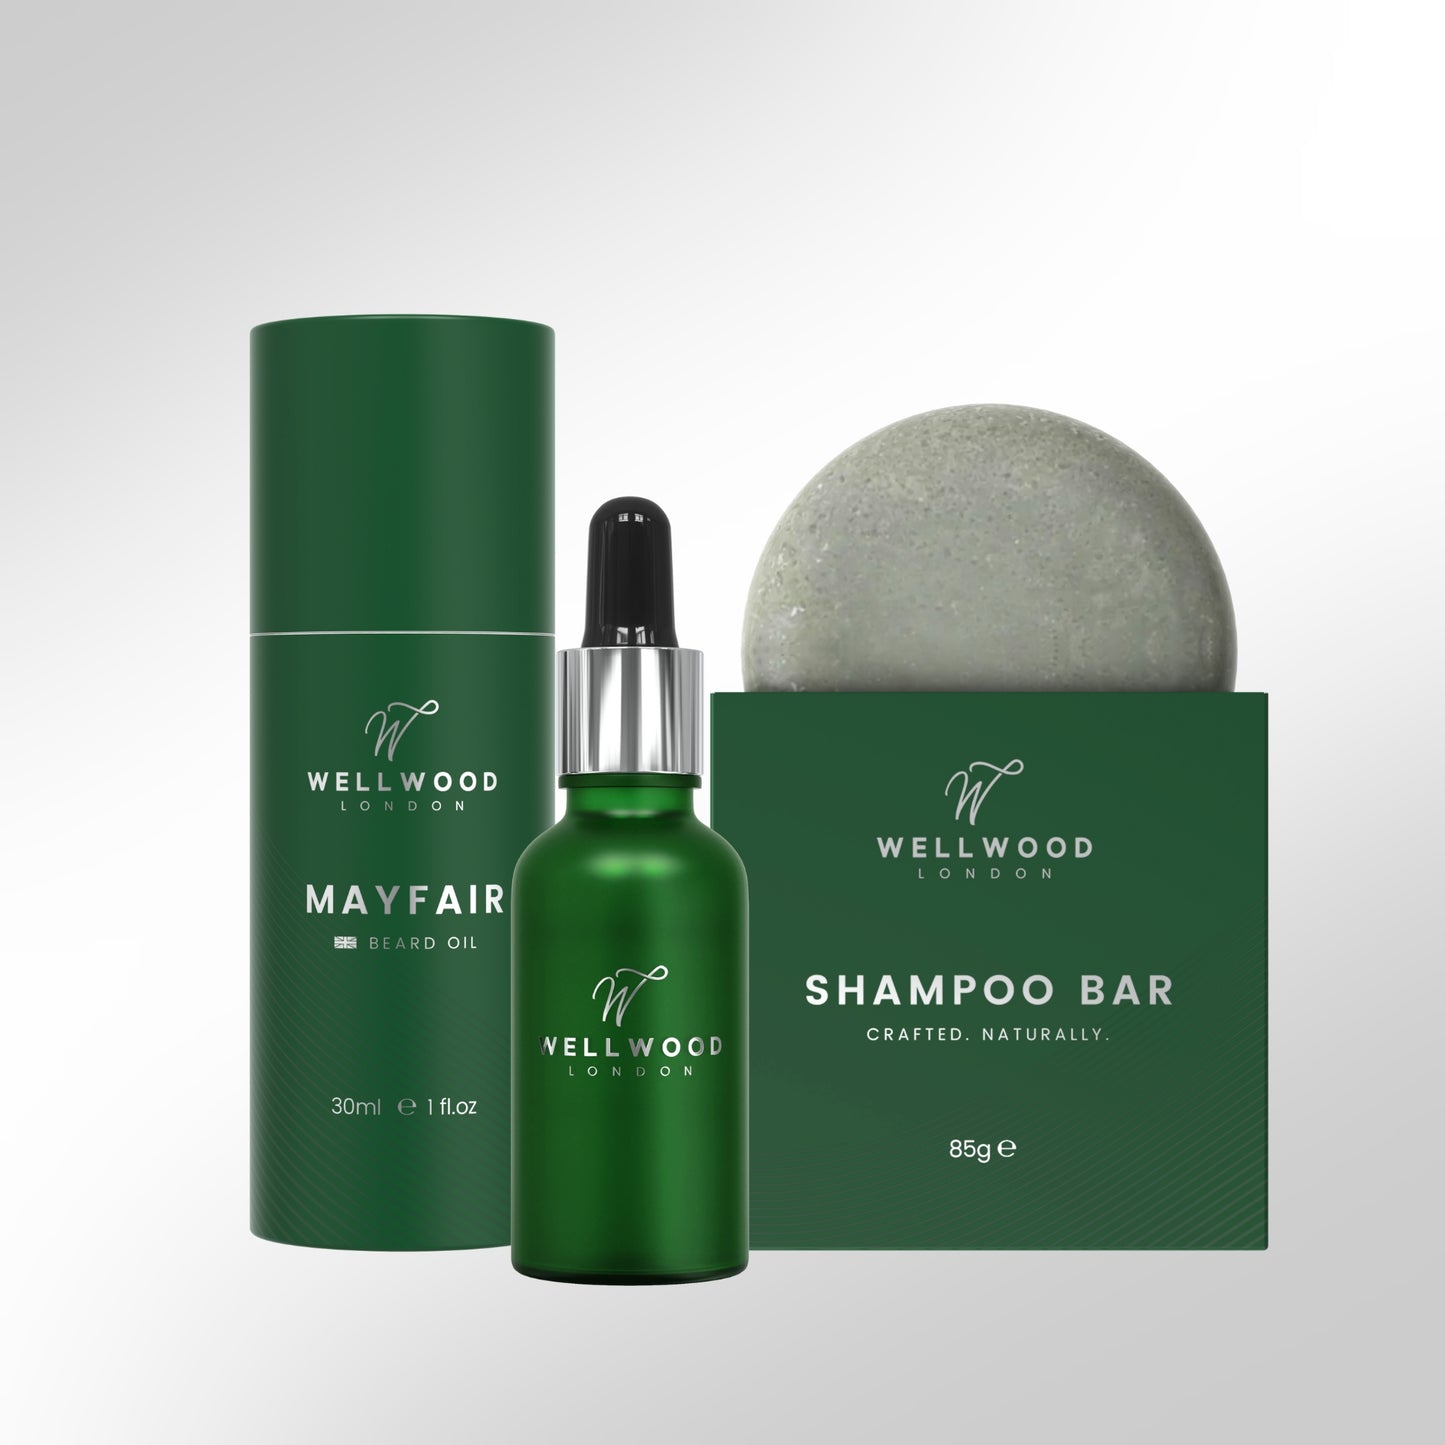 Beard Oil and Shampoo Bar